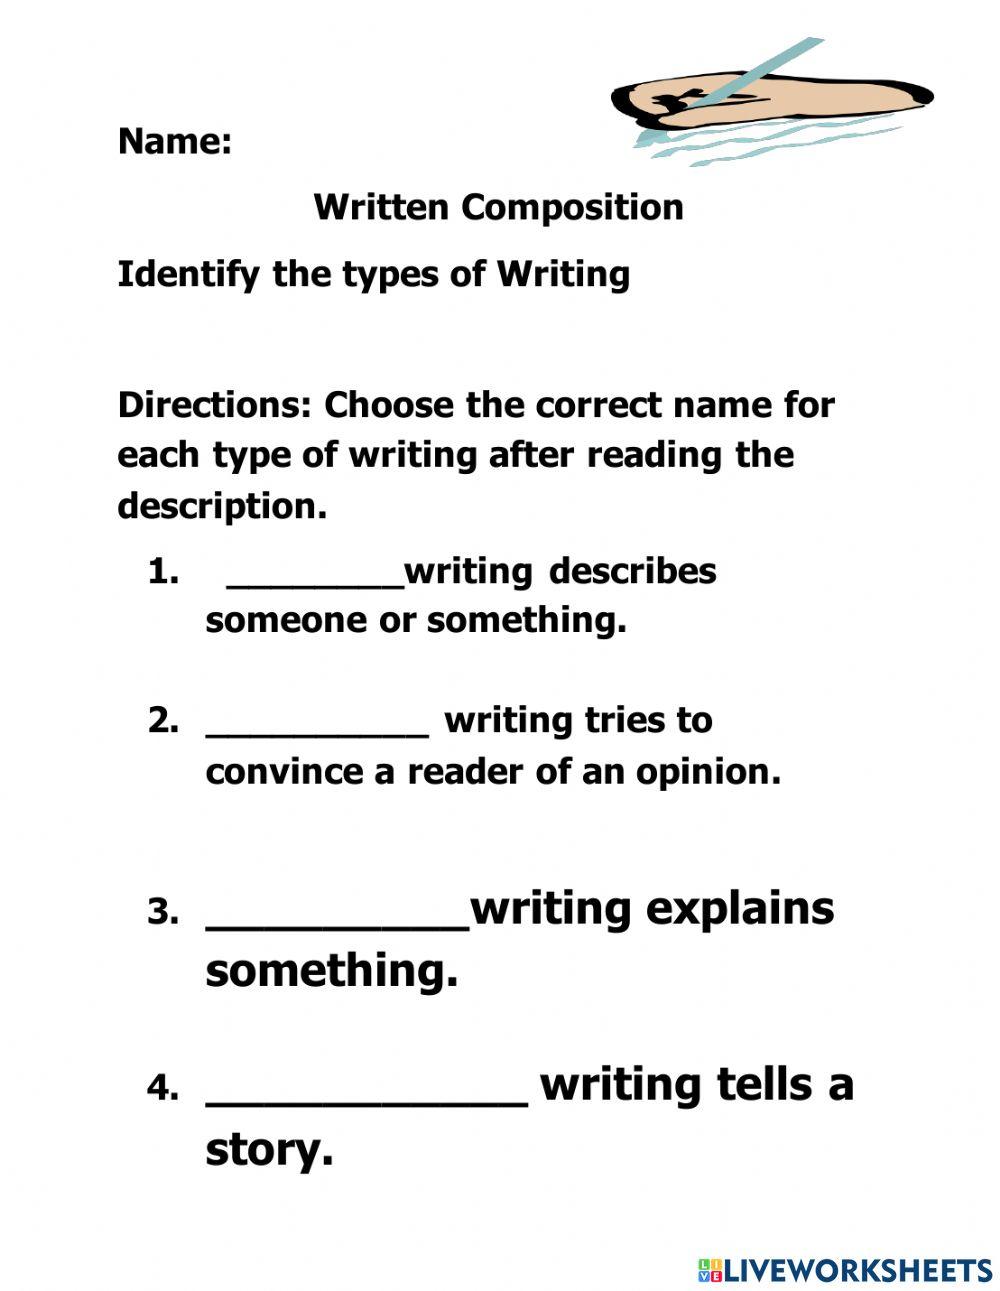 Identify Types of Writing